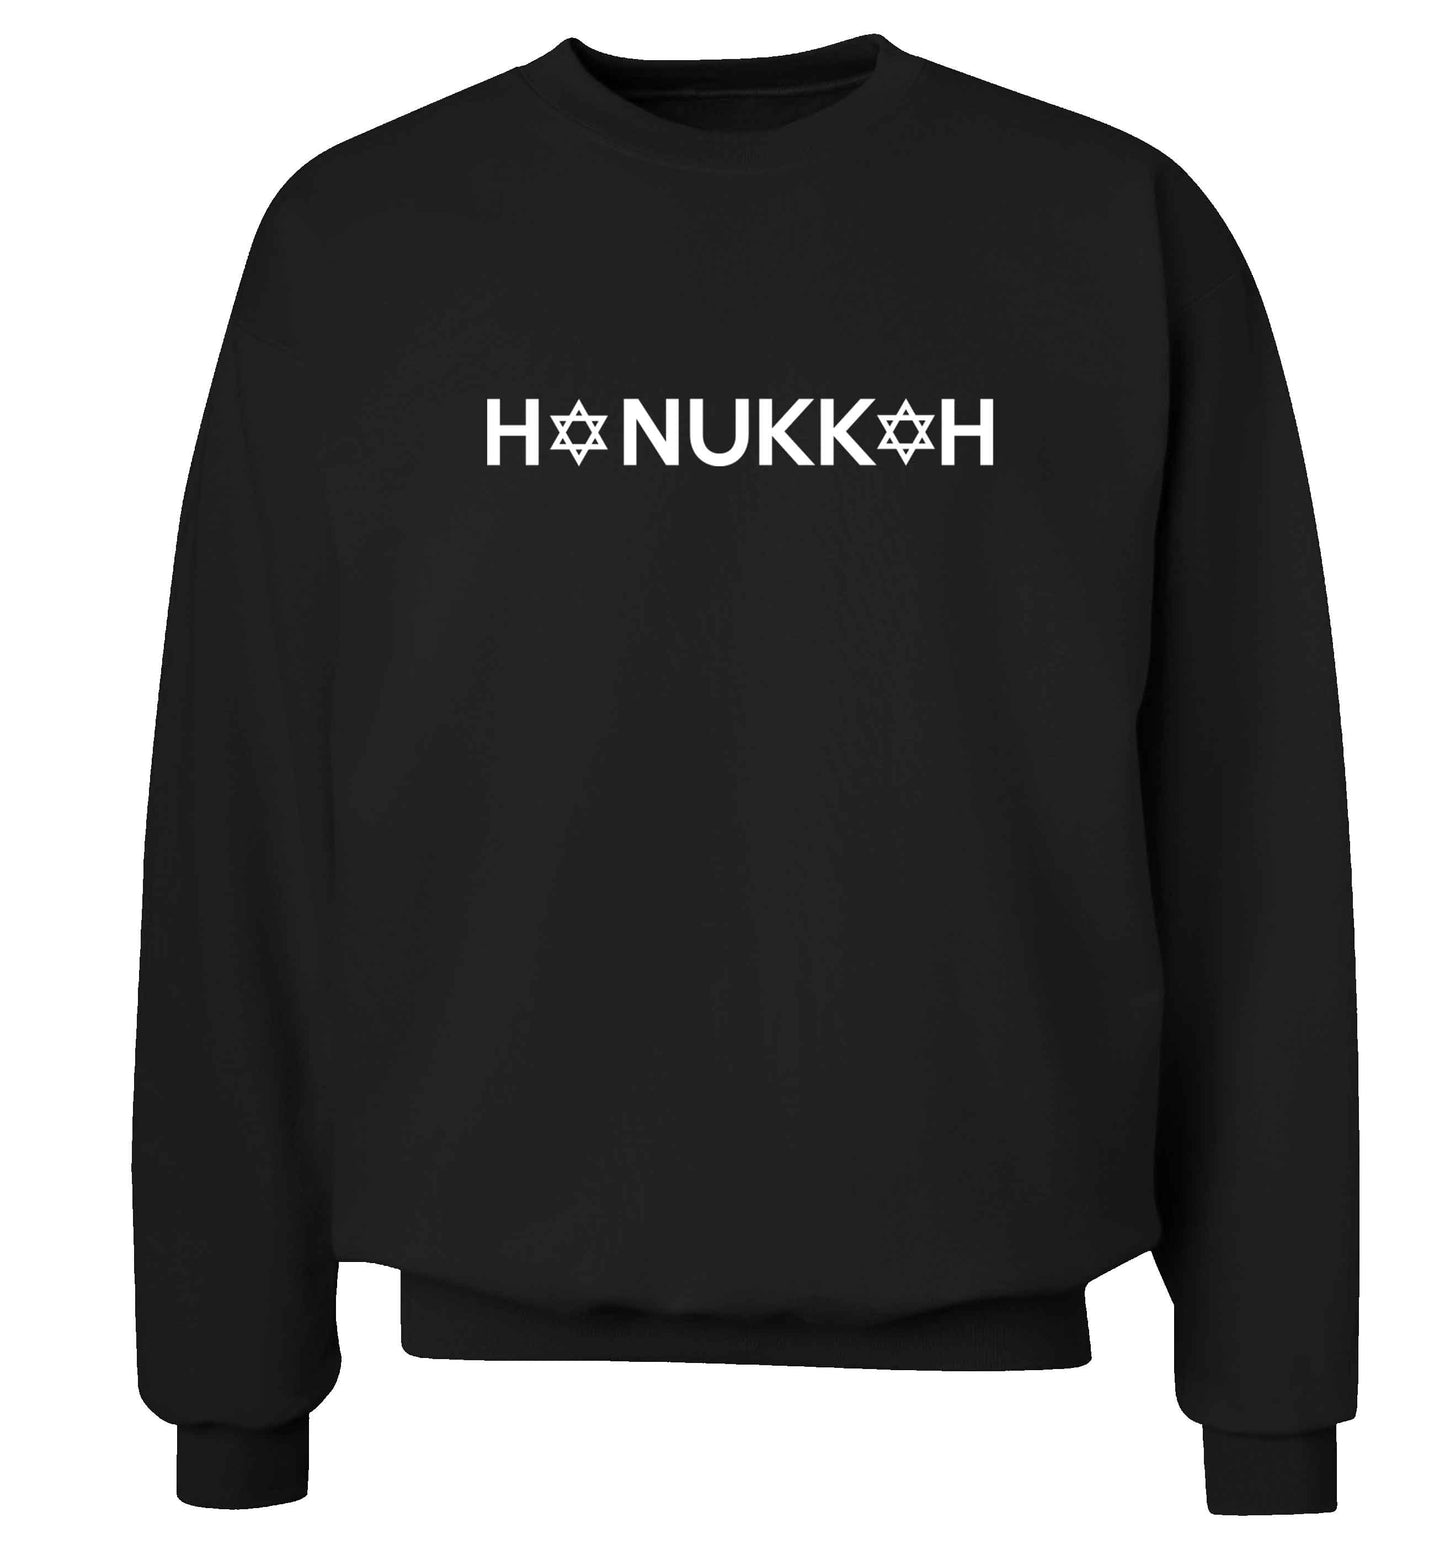 Hanukkah star of david adult's unisex black sweater 2XL